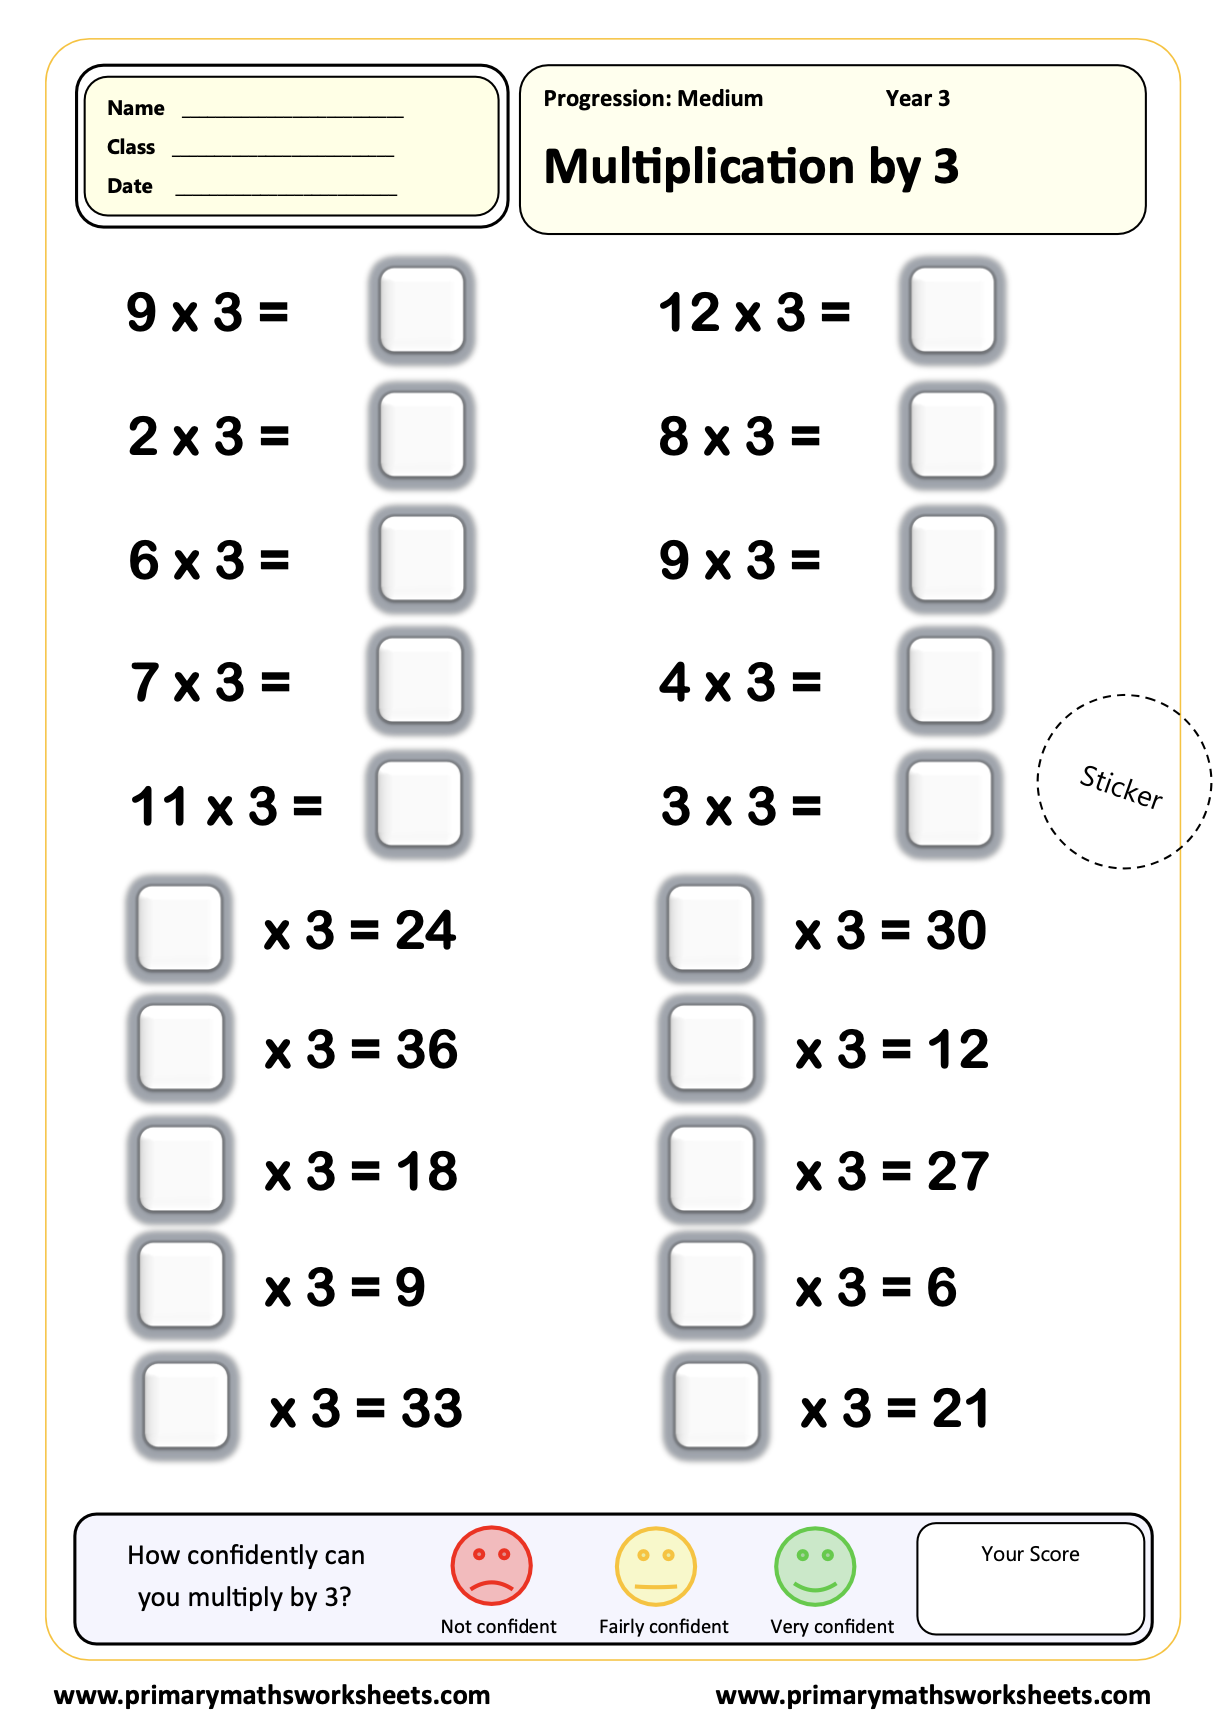 Multiplication by 3 Worksheet